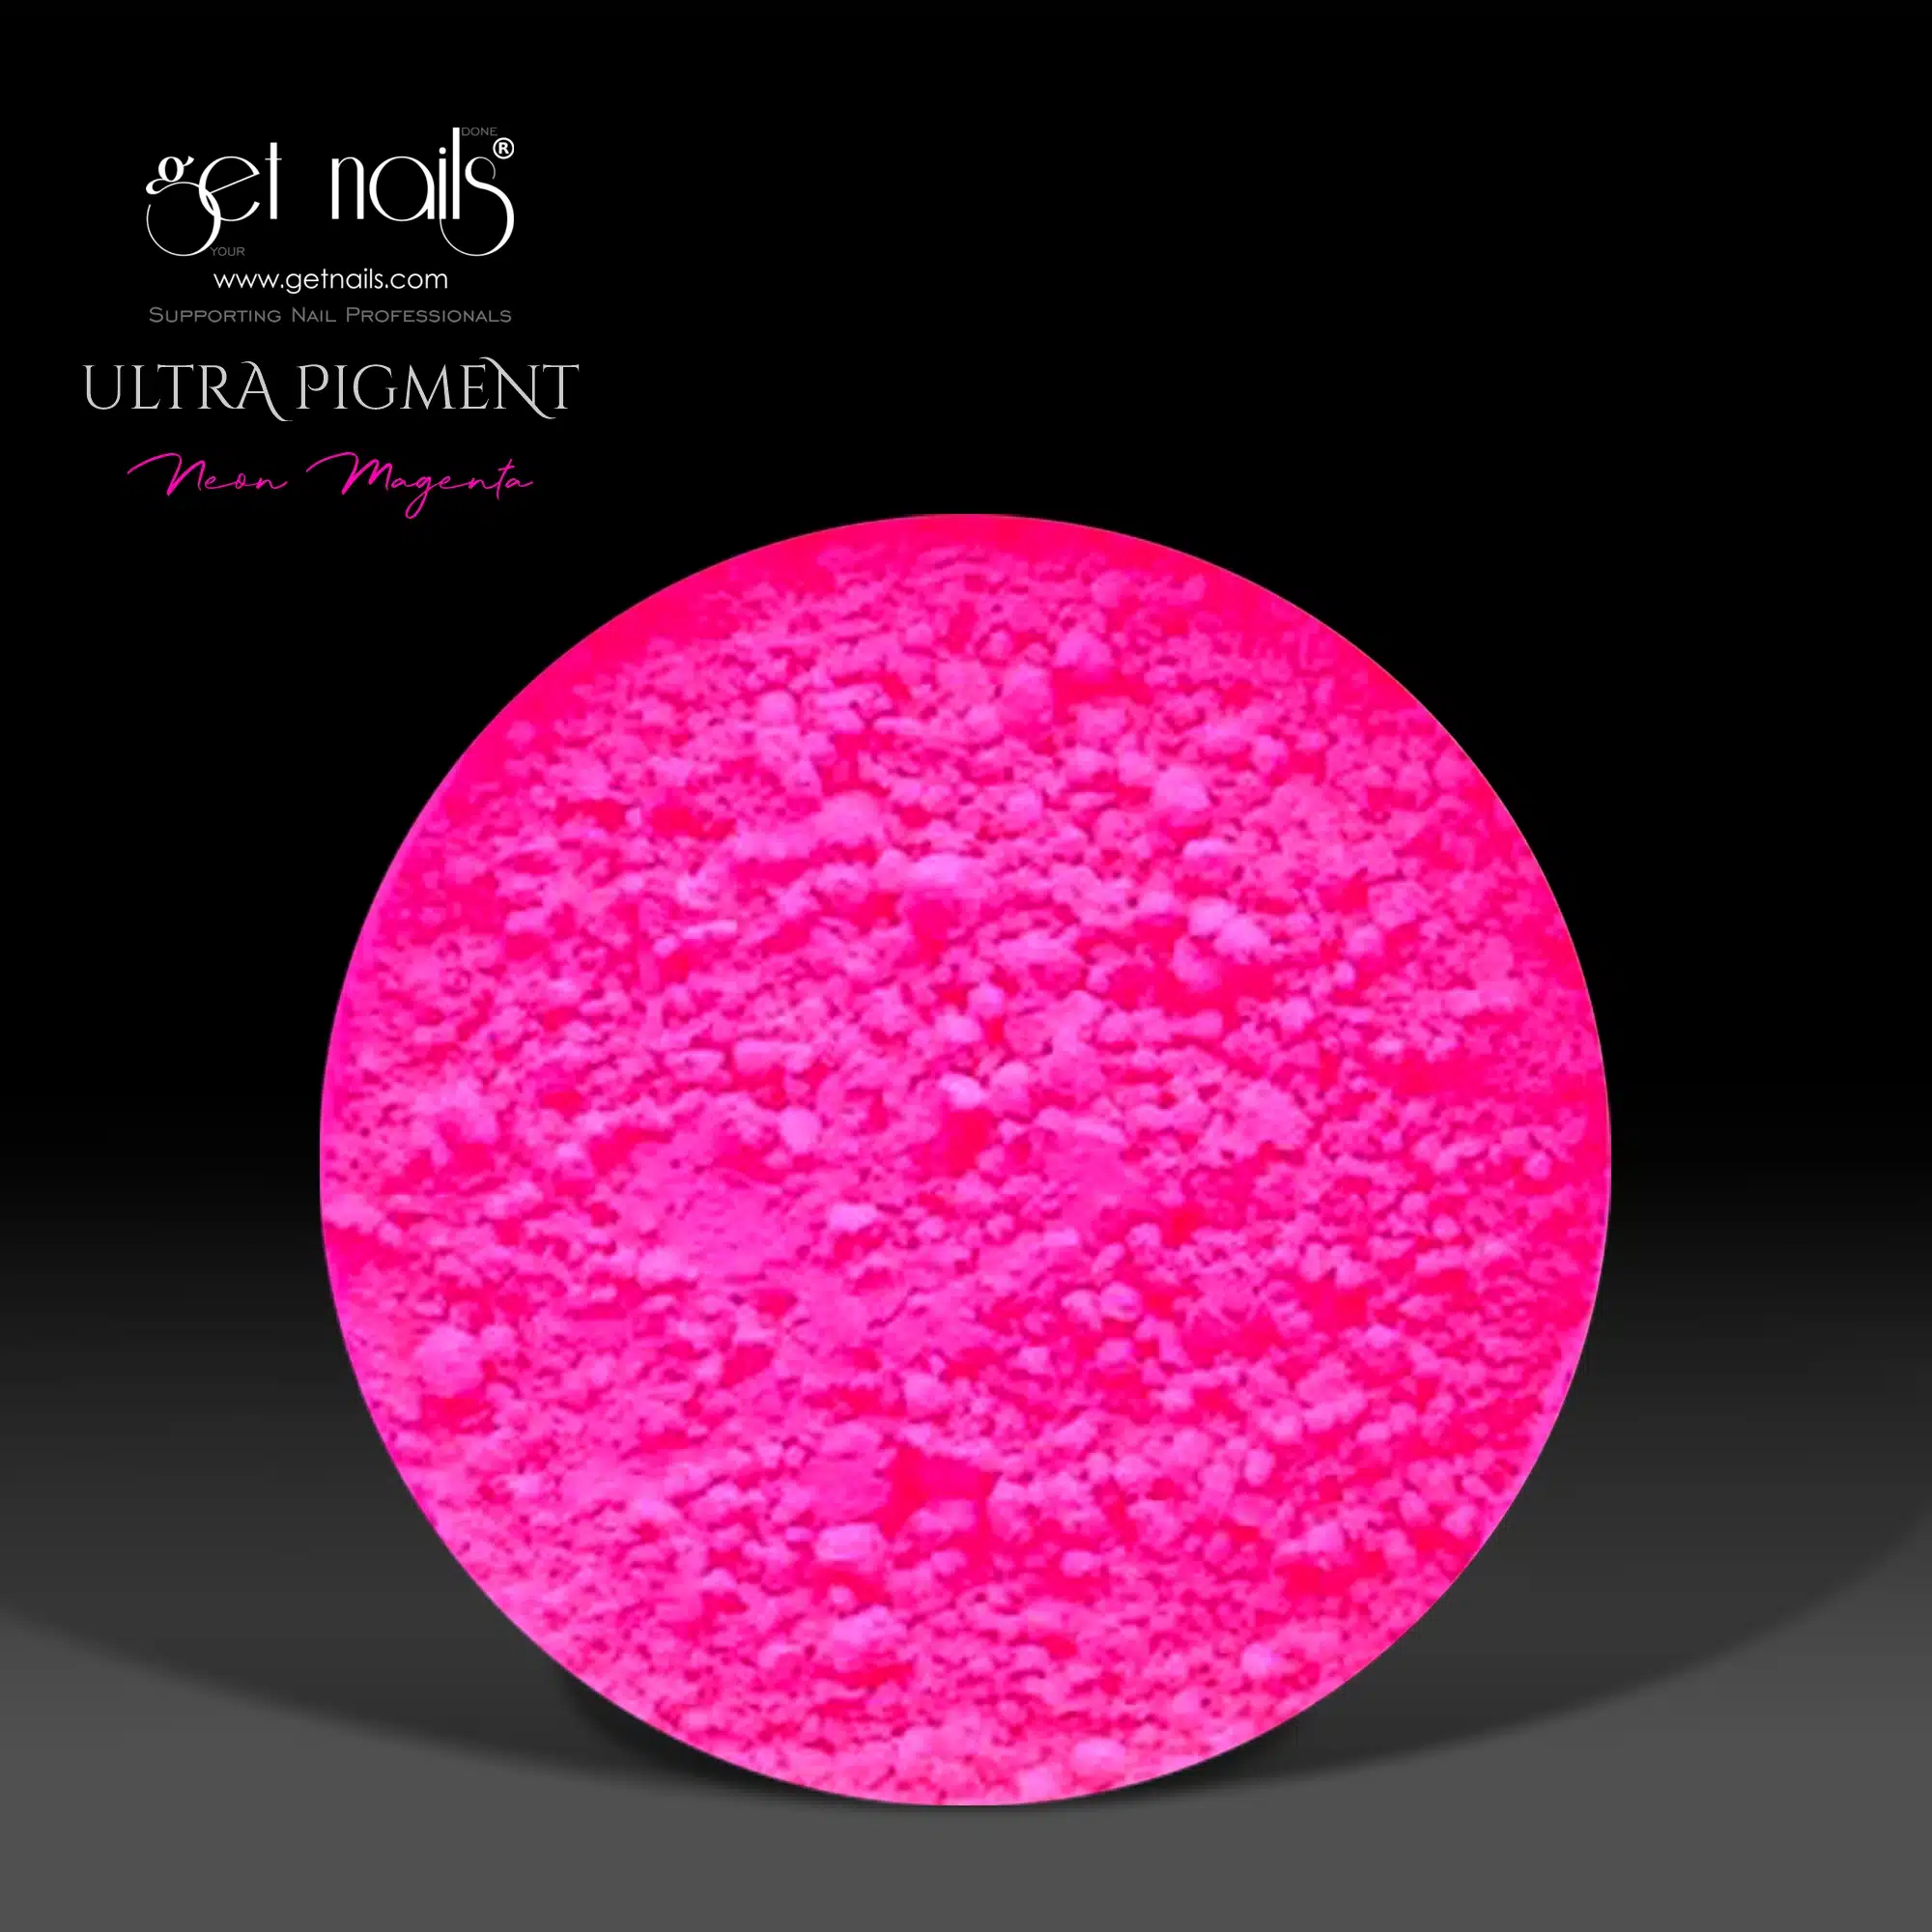 Get Nails Austria - Ultra Pigment Neon Magenta 1.5g